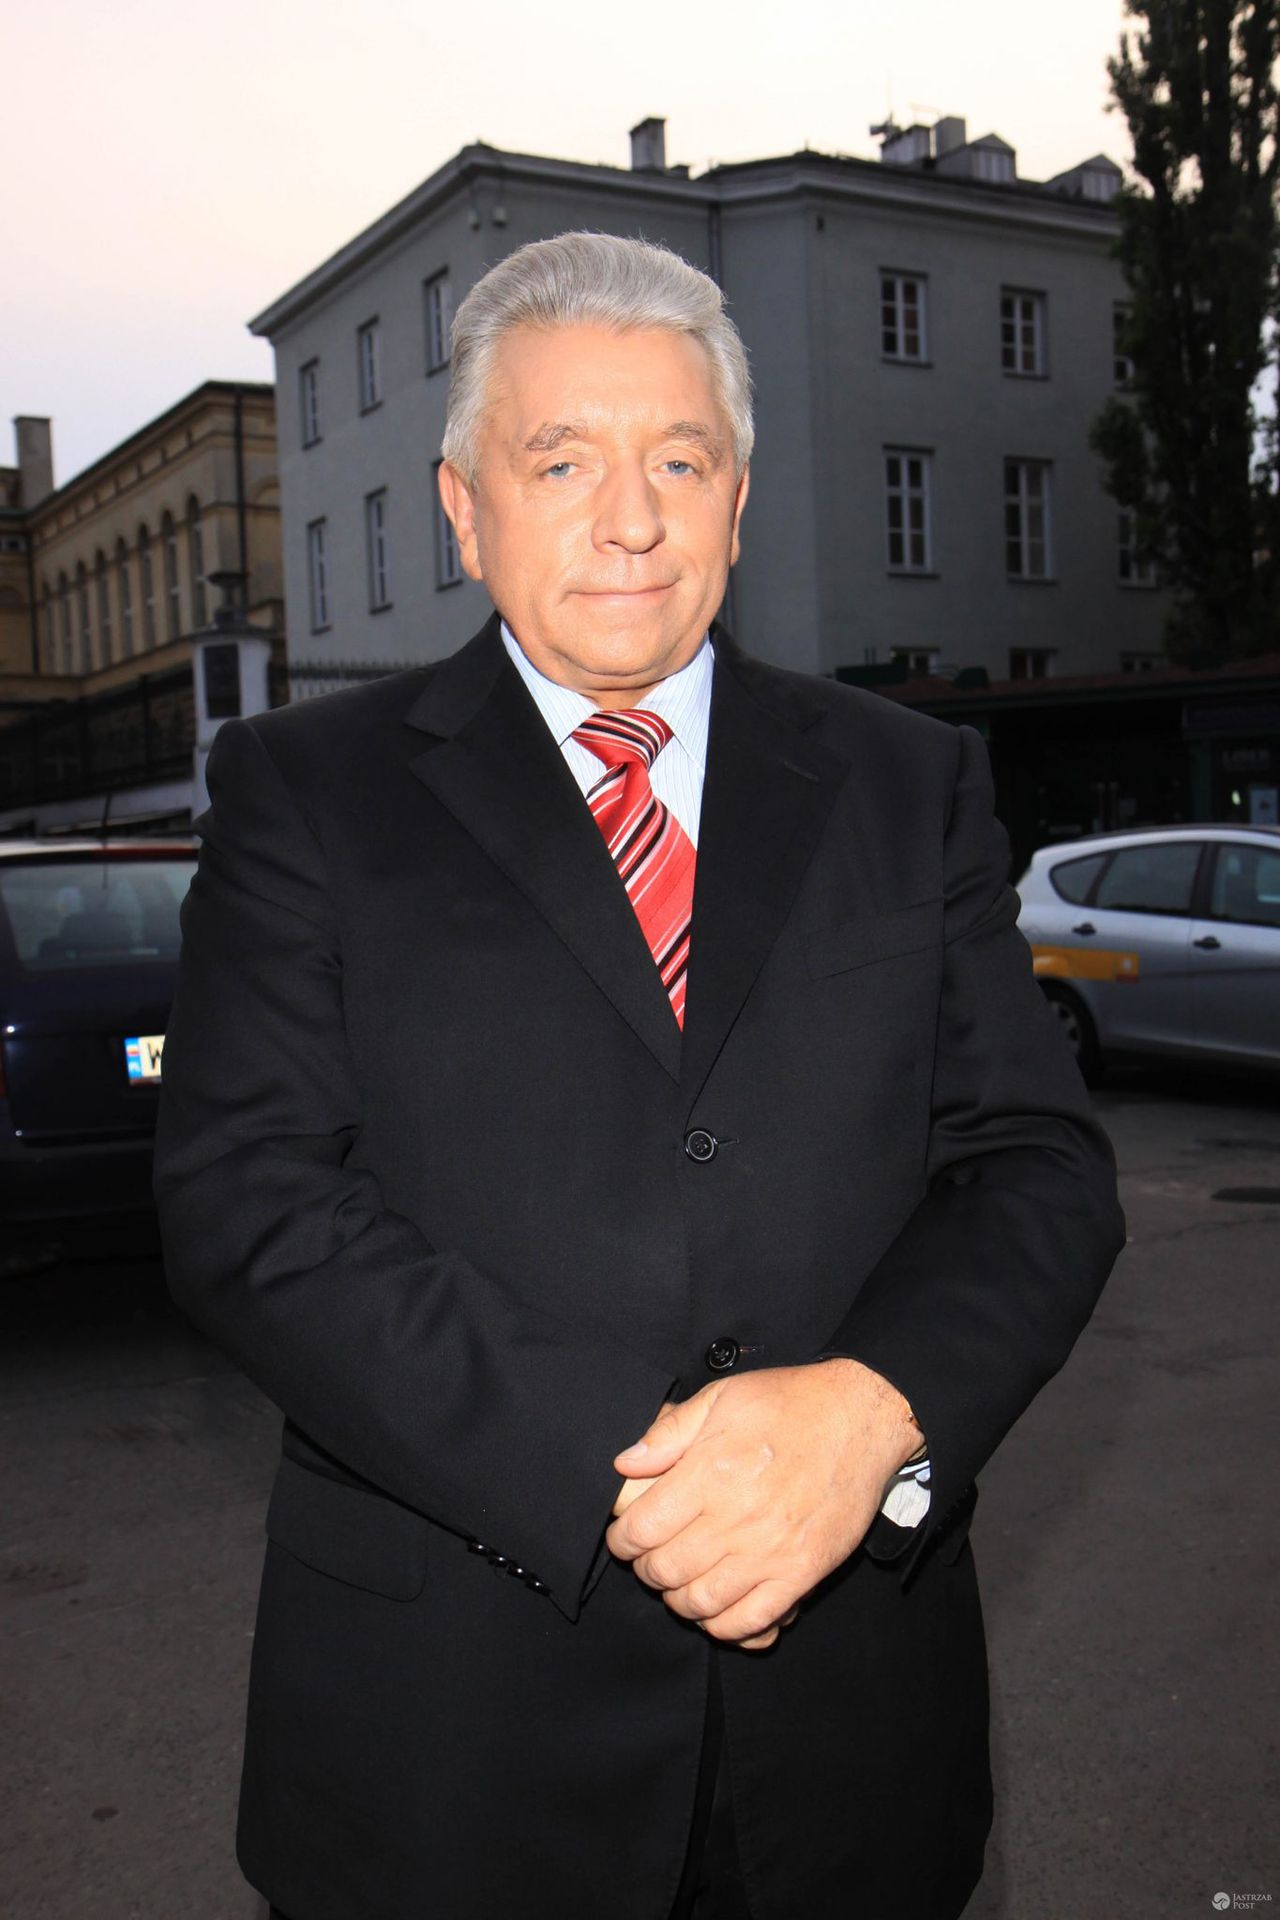 Andrzej Lepper